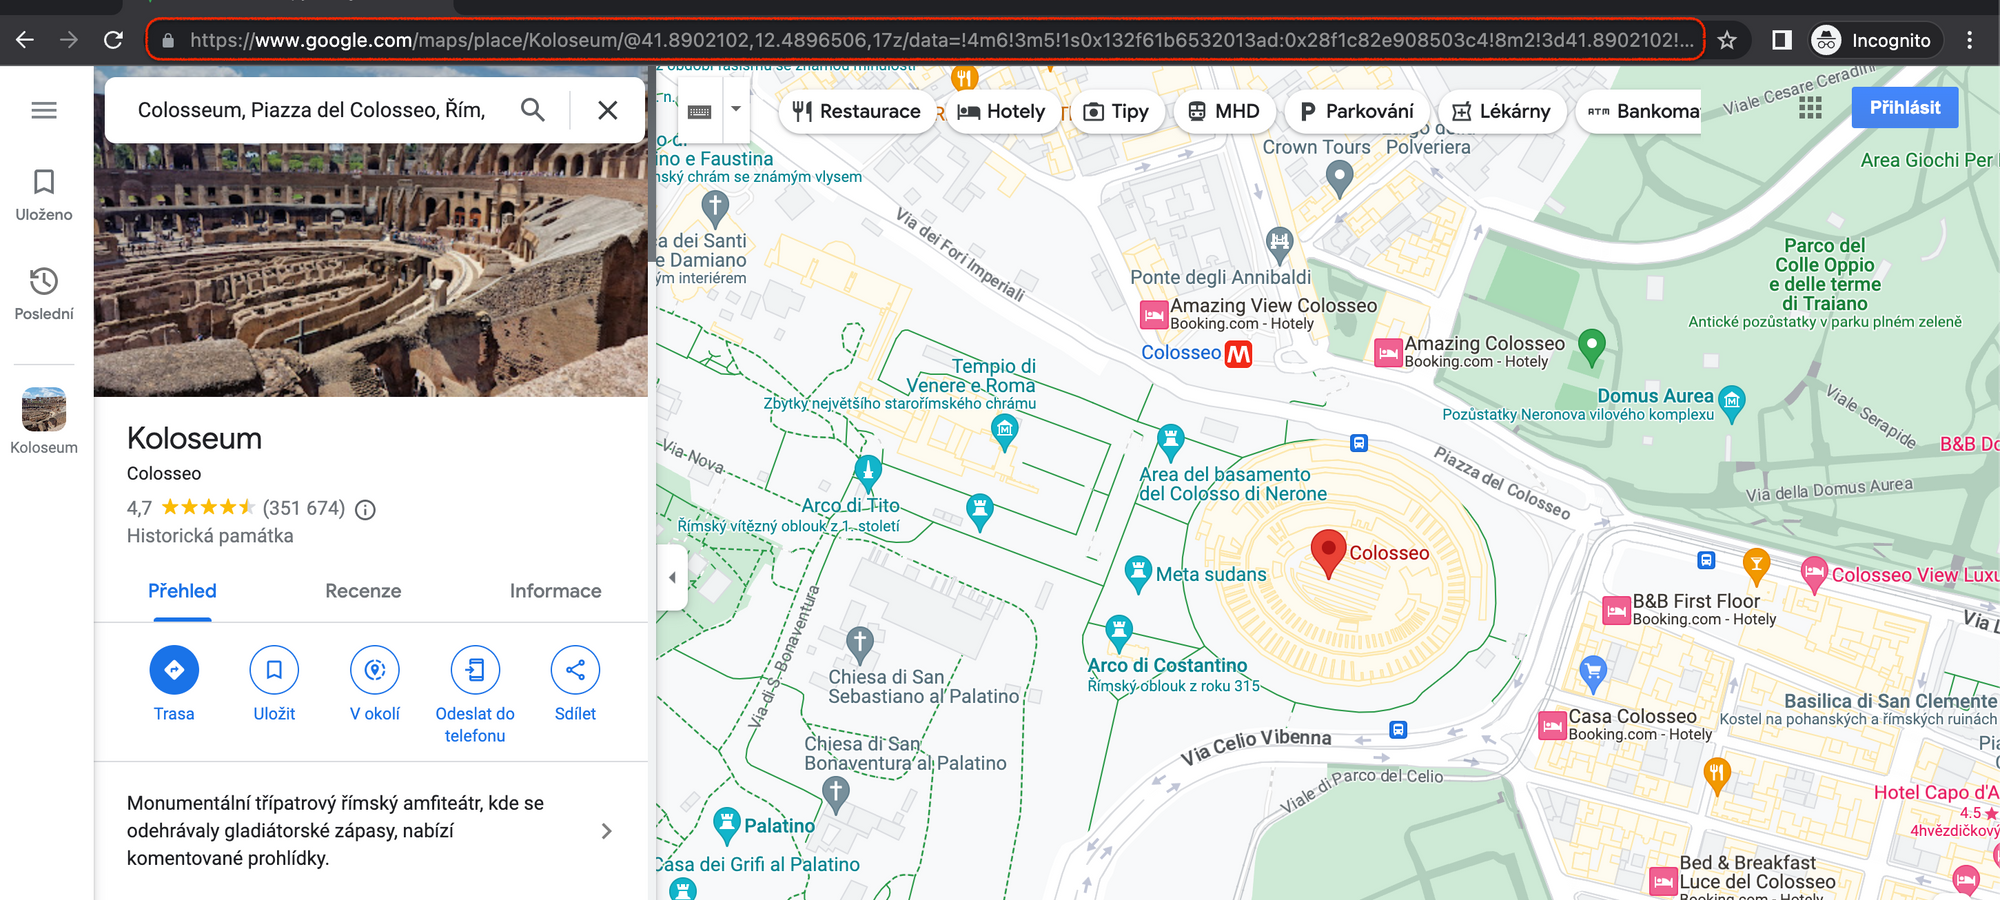 Step 1. Choose landmarks to analyze: URL of the Colosseum